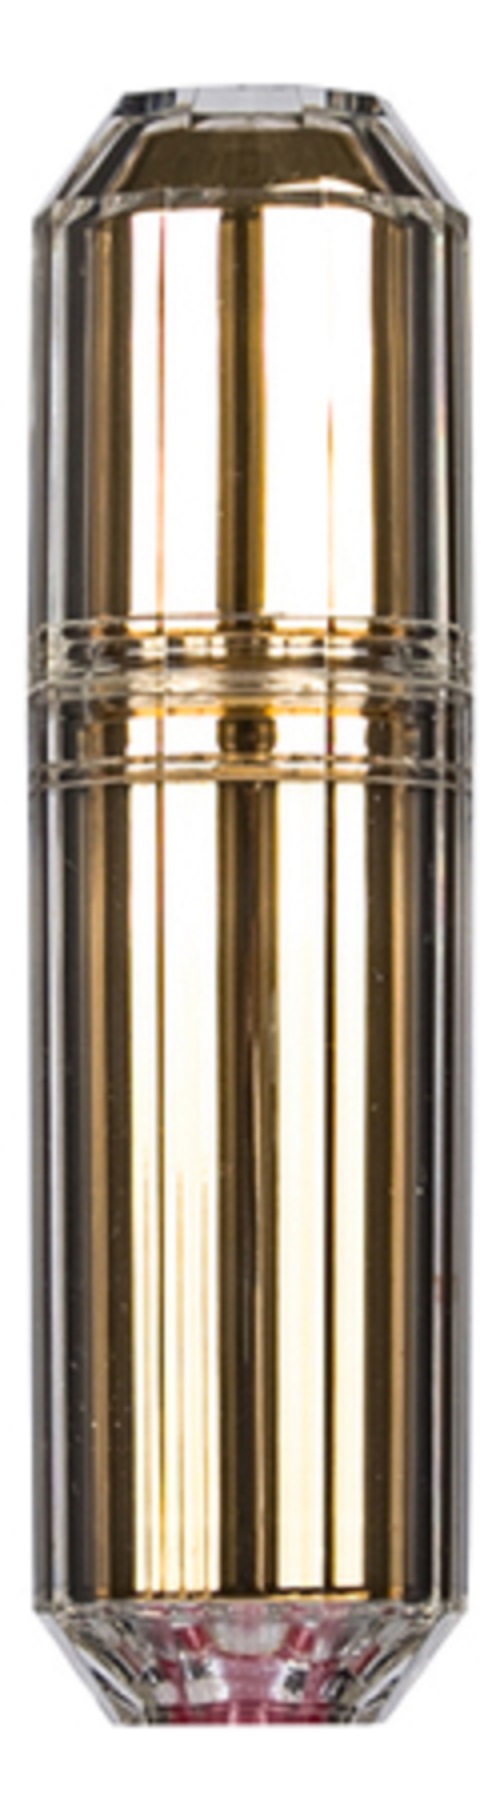 Атомайзер Travalo Bijoux Oval Perfume Spray Gold 5мл